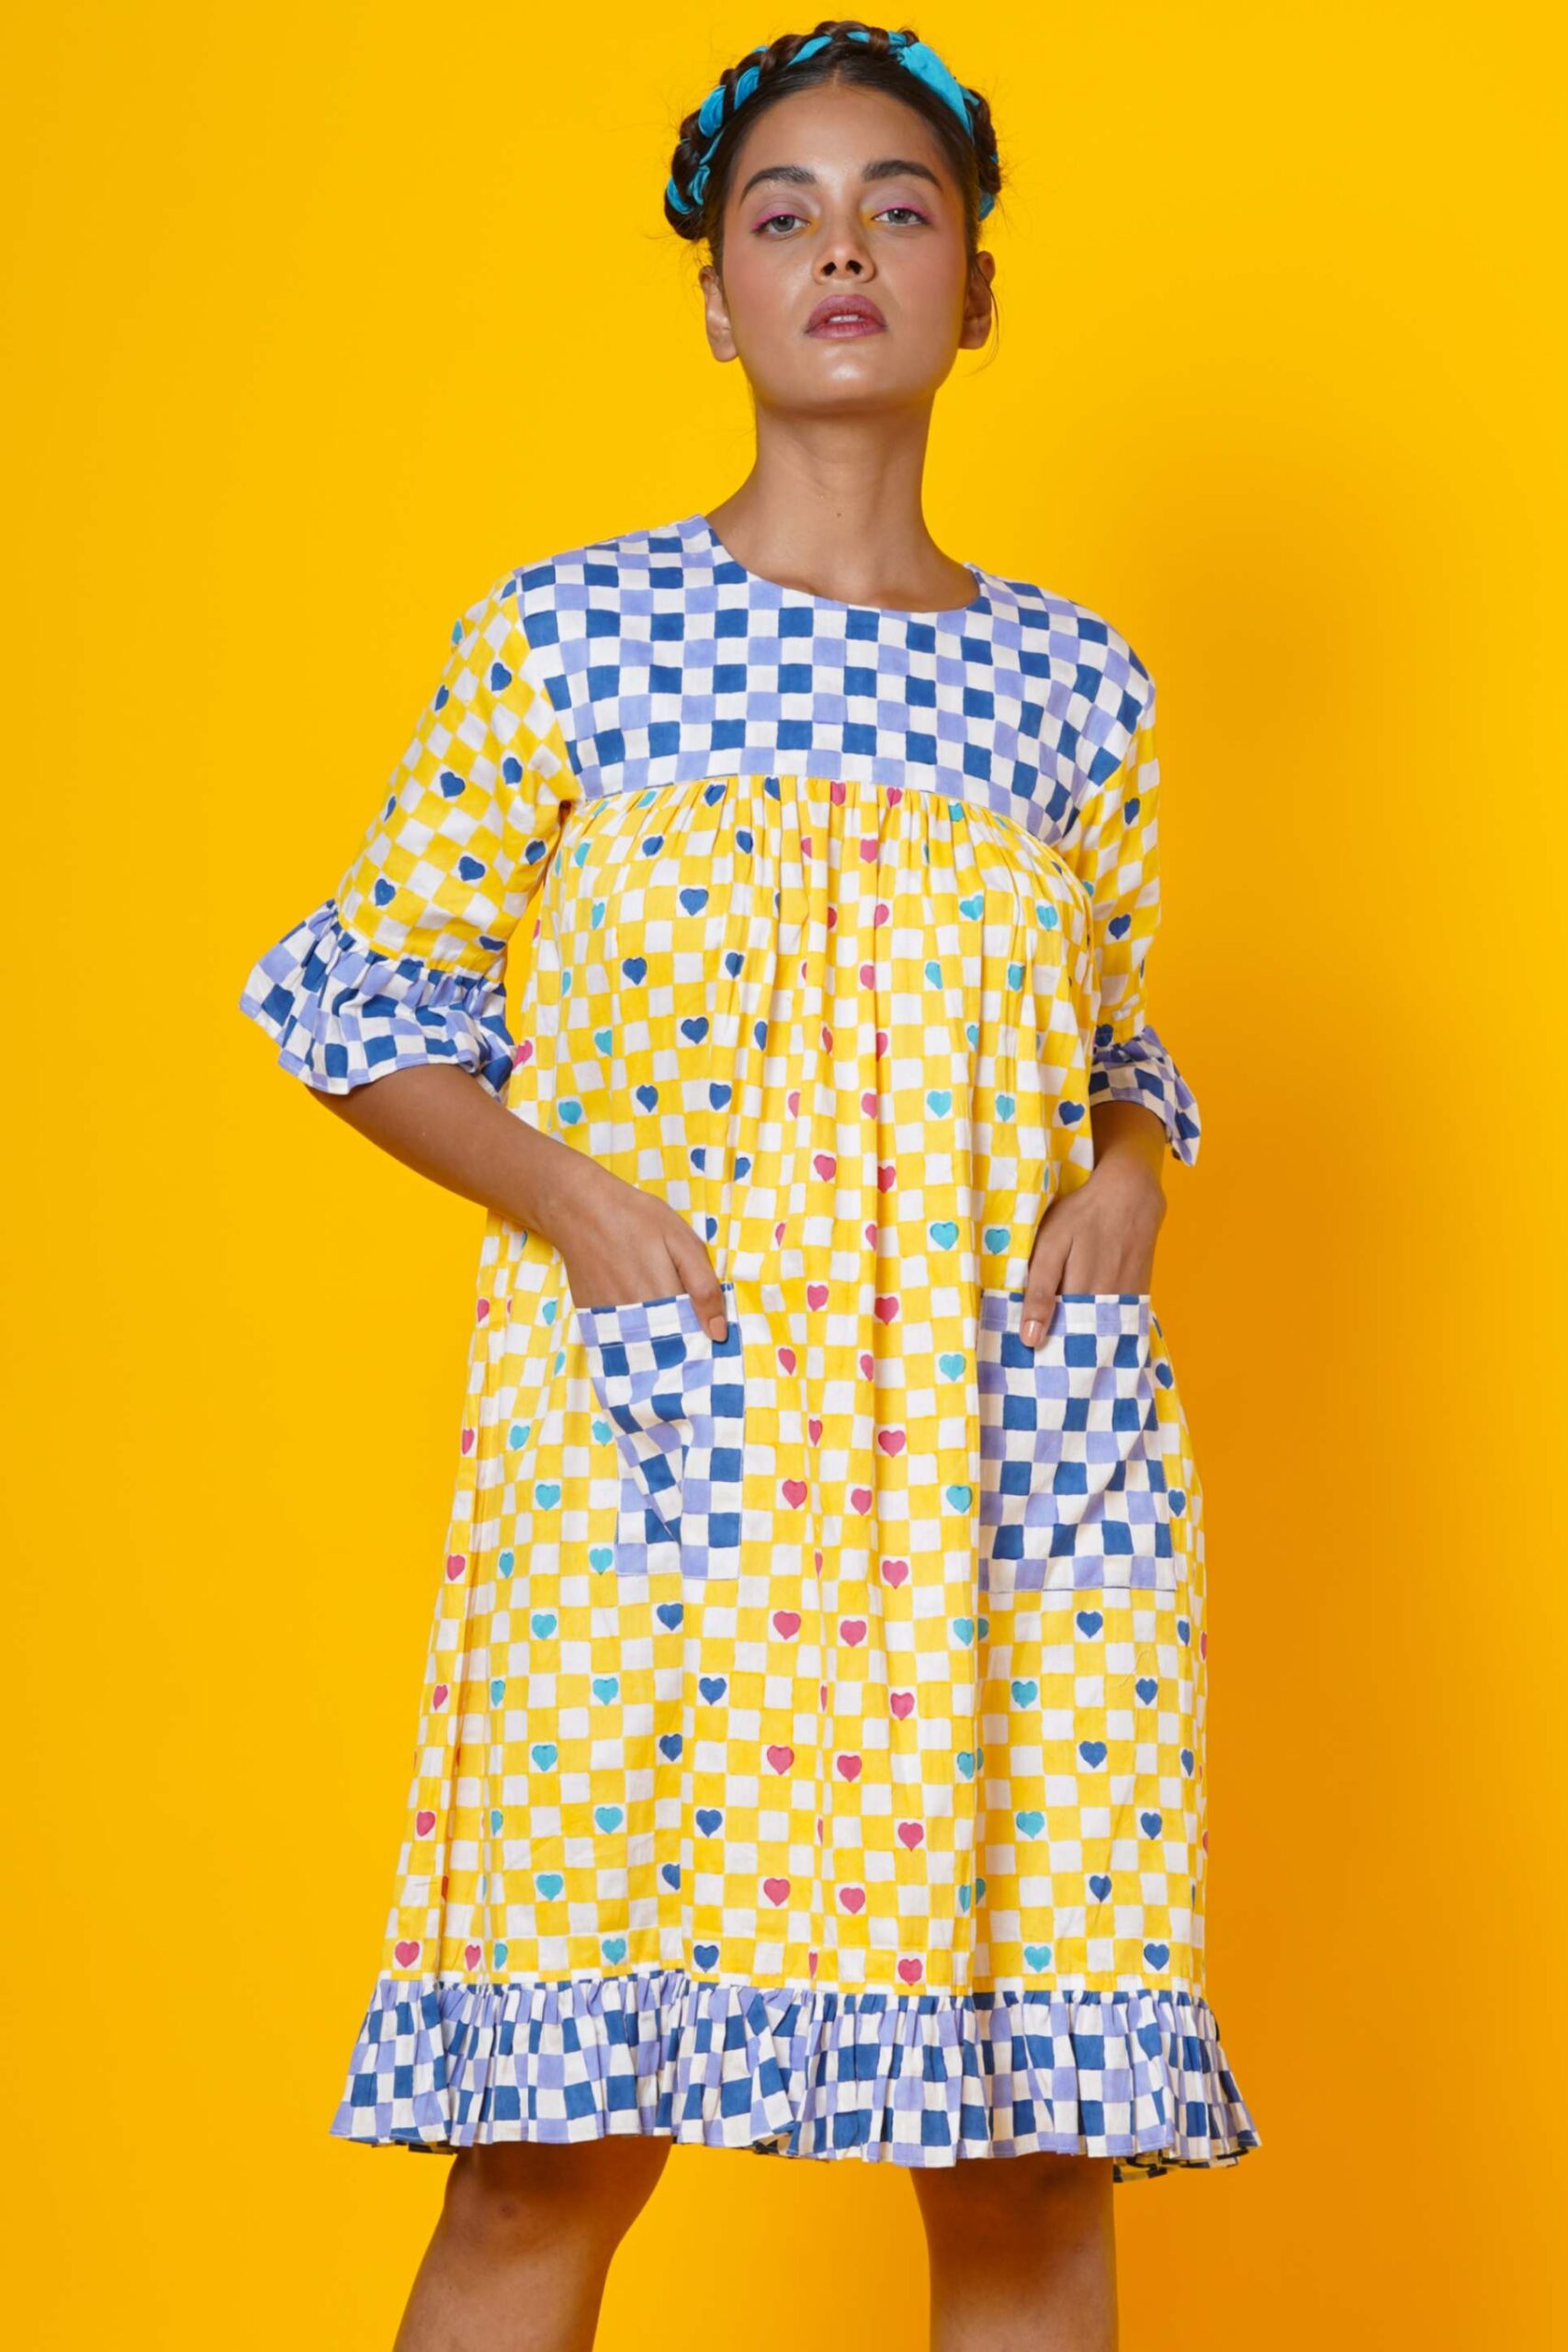 “Blue and Yellow Block Print Women dress in polka hearts “